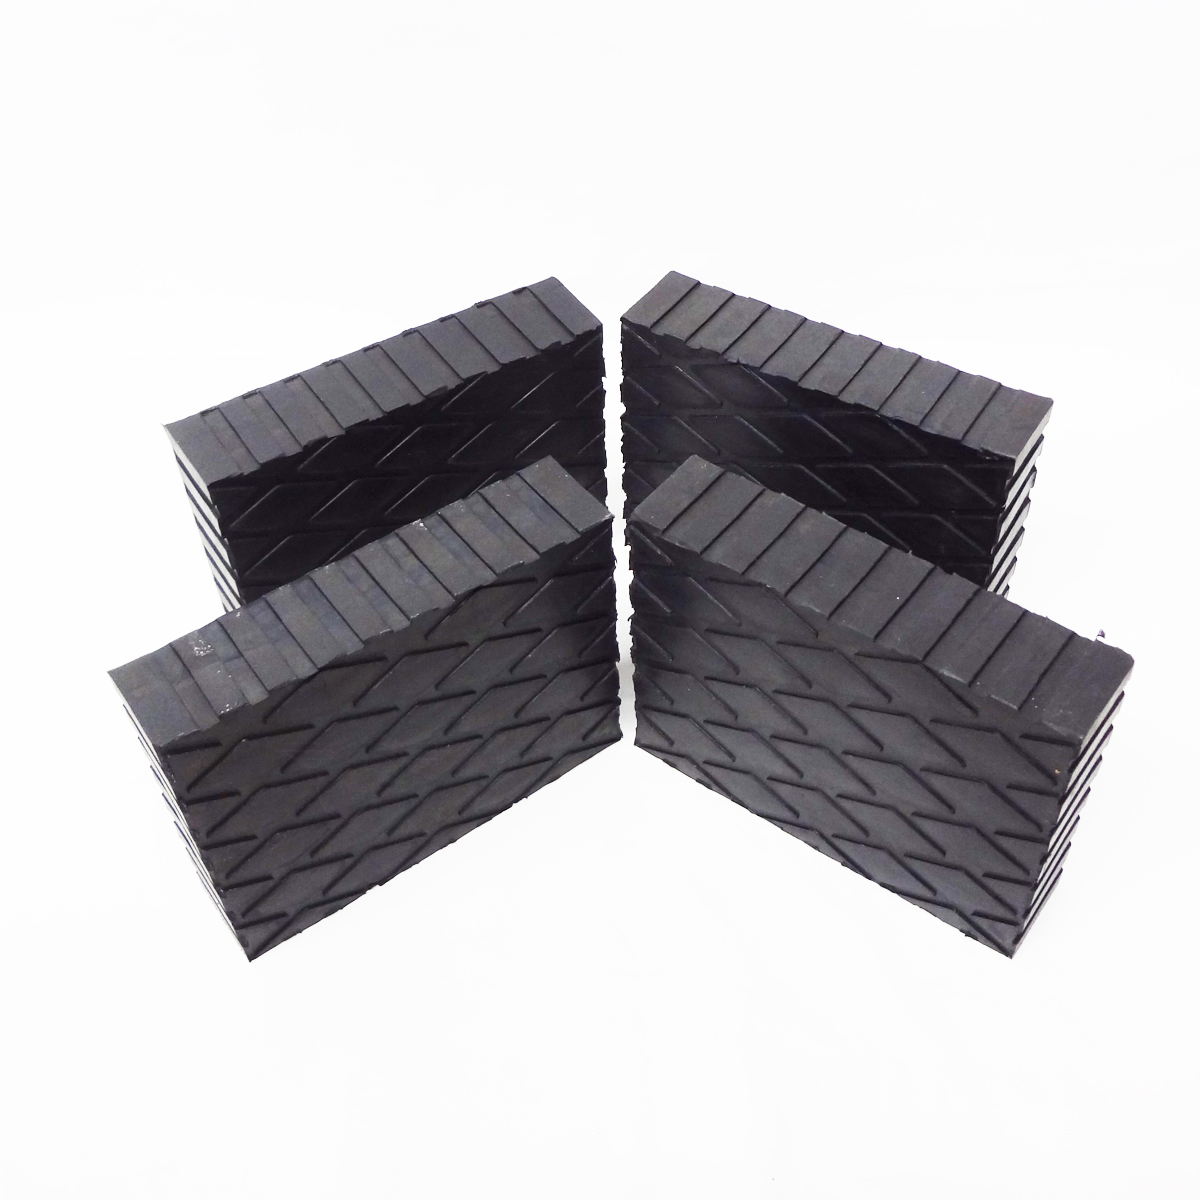 Solid Rubber Lift Block Pad (6 x 4 3/4 x 1.5) Set Of 4